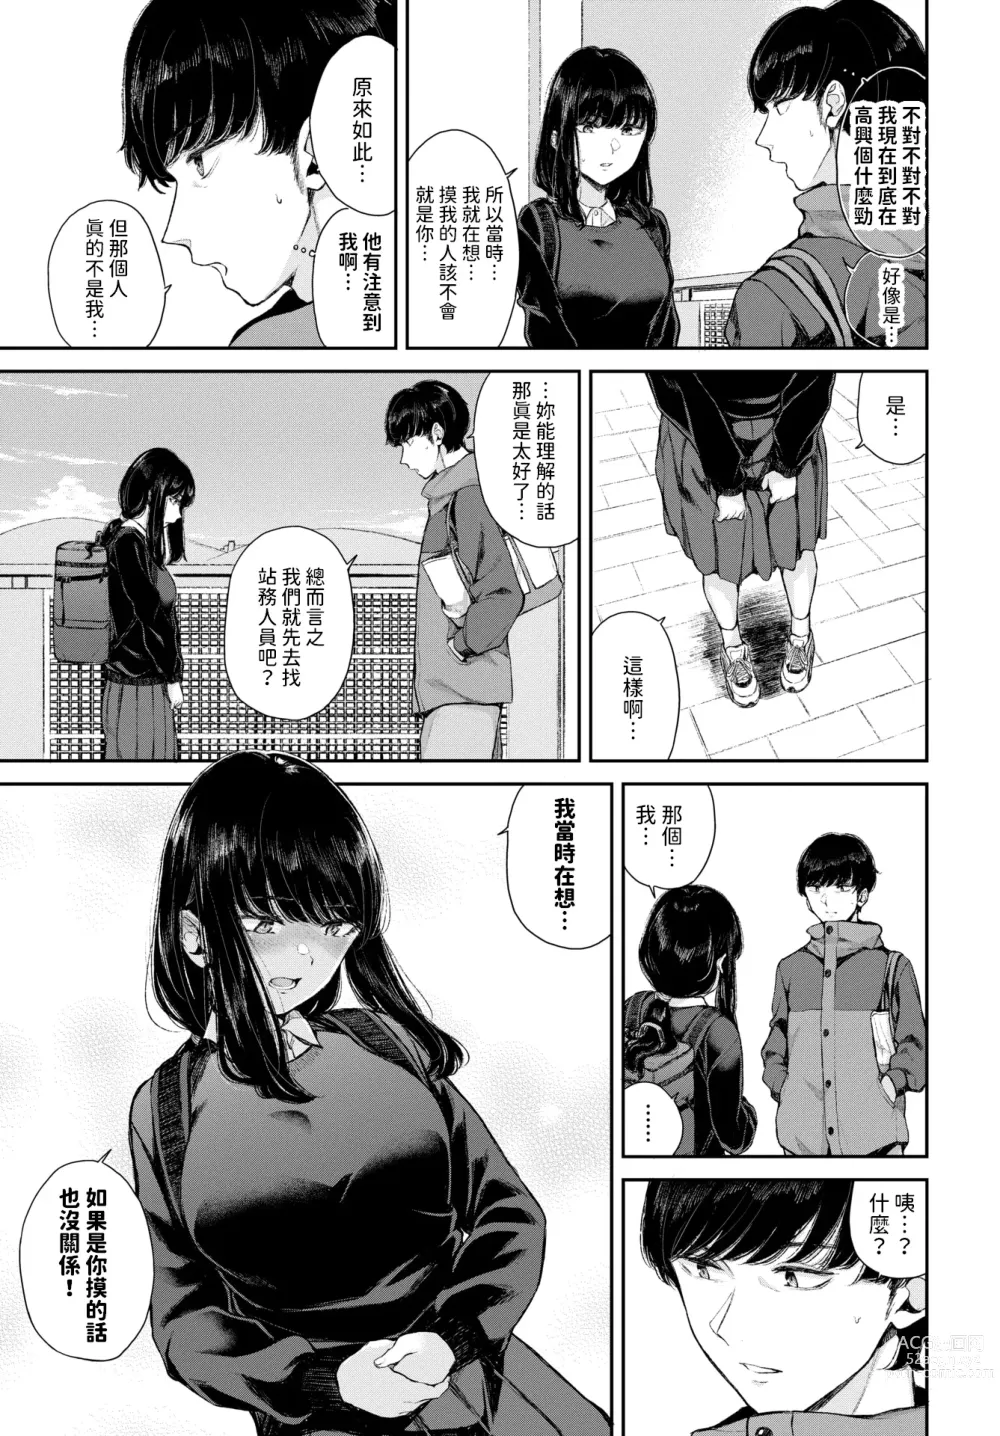 Page 7 of manga Yuki Zuri to Ao - passing by and blue.